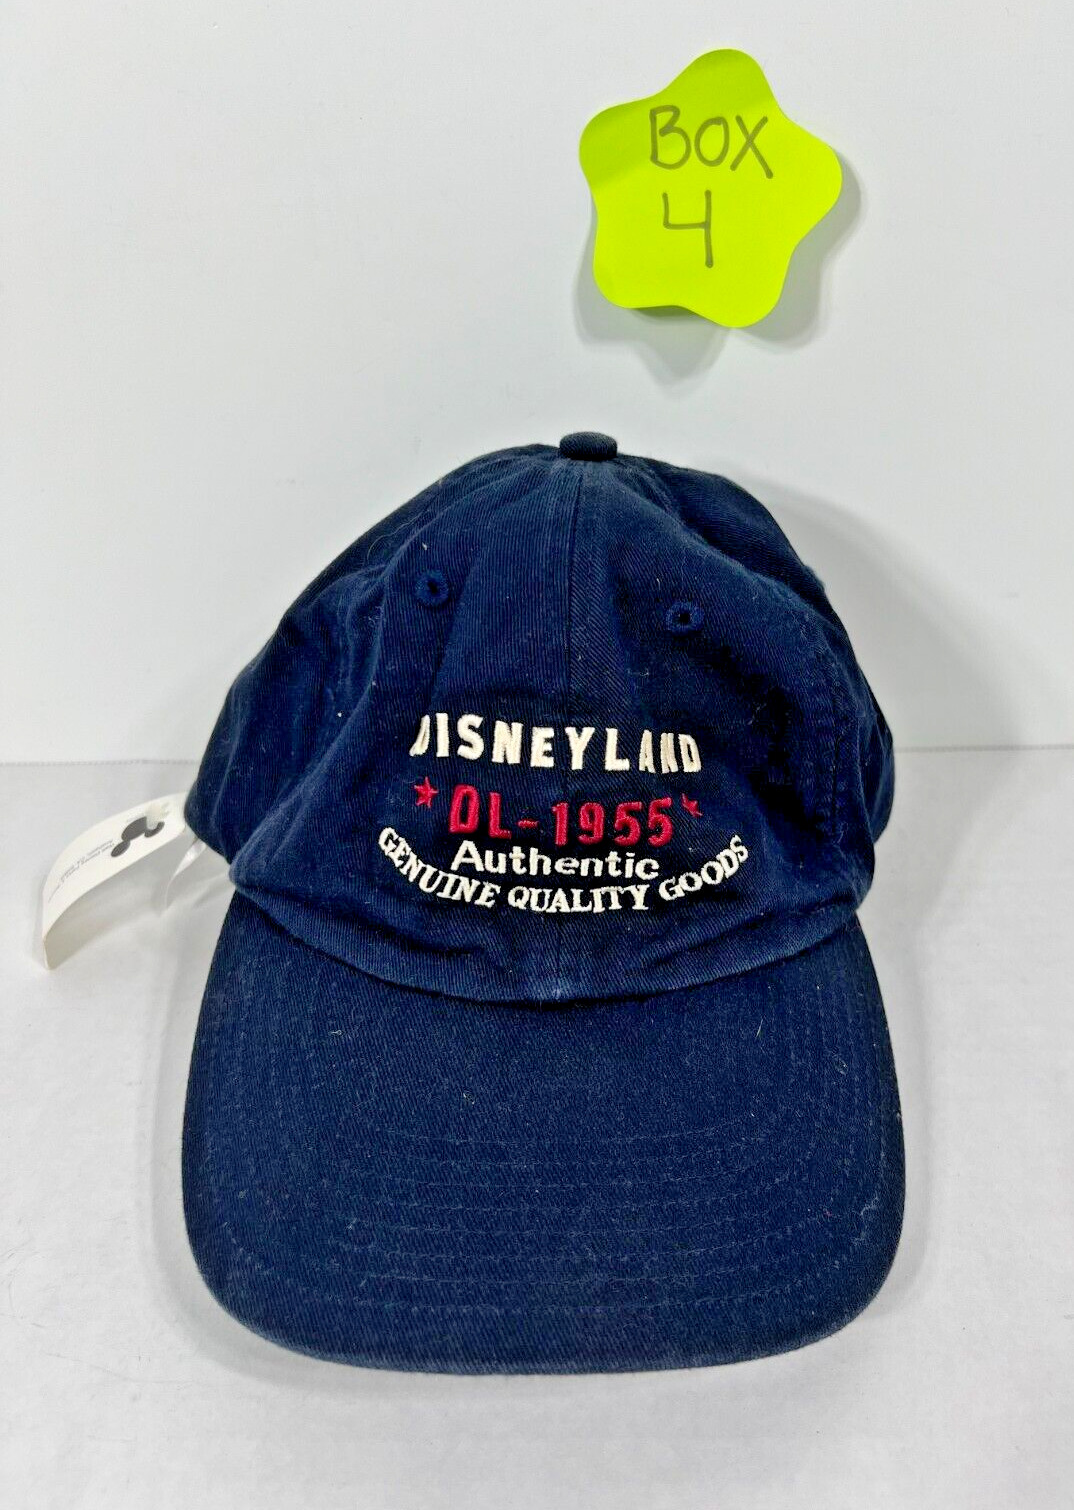 Disneyland DL-1955 Authentic Genuine Quality Goods Baseball Cap NWT